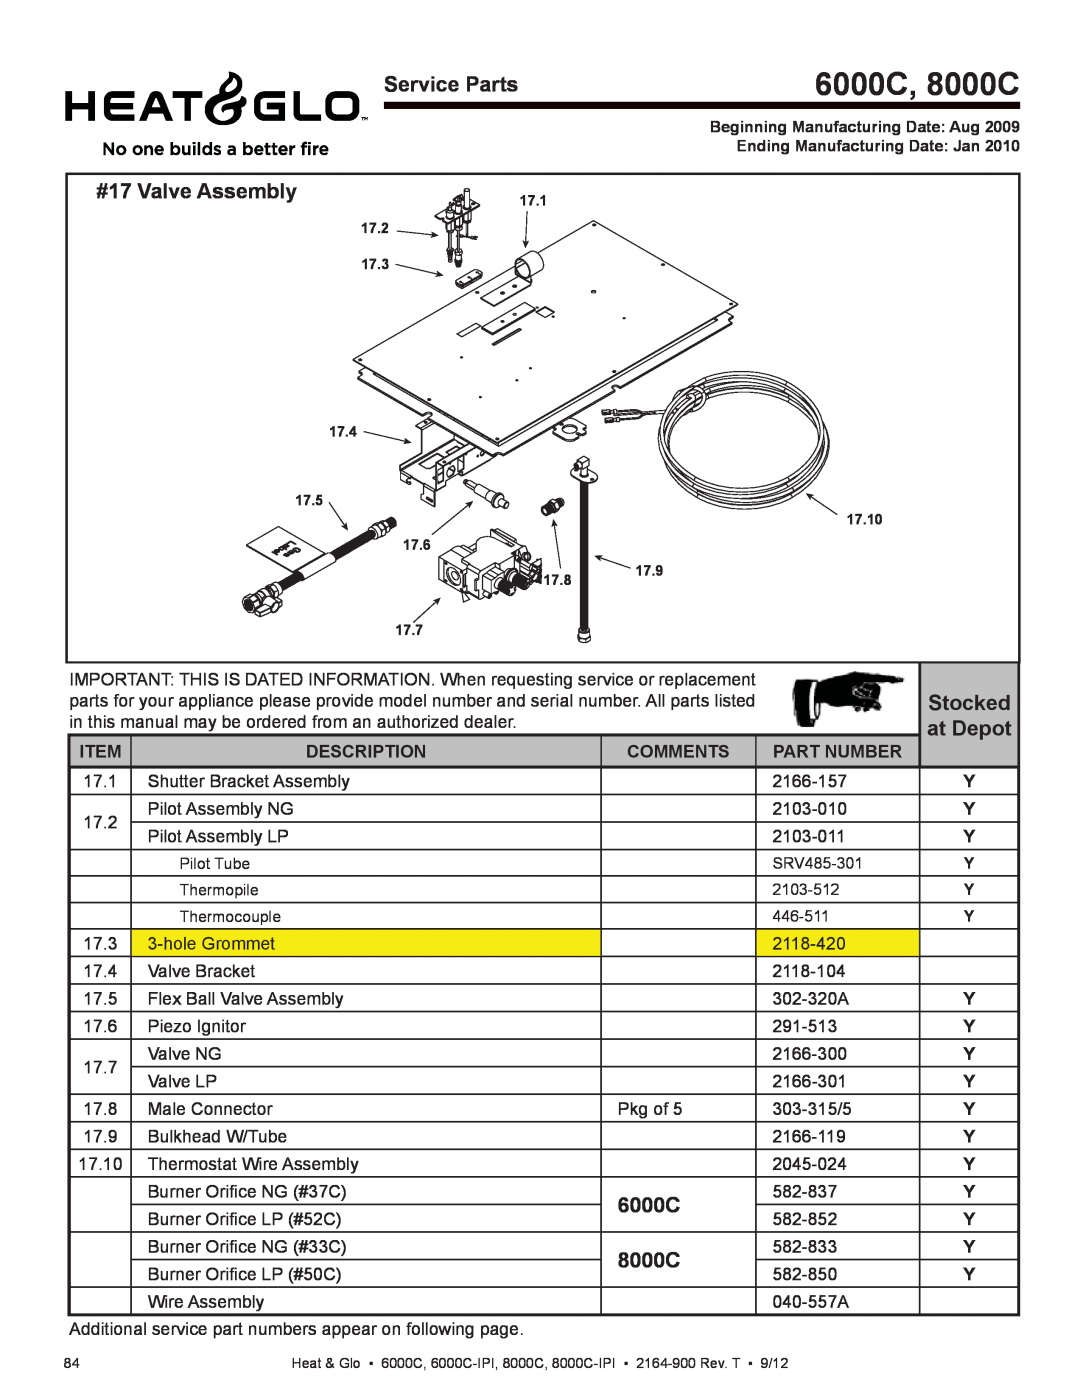 Heat & Glo LifeStyle manual Service Parts, #17 Valve Assembly, Stocked, 6000C, 8000C, at Depot, Item, Description 